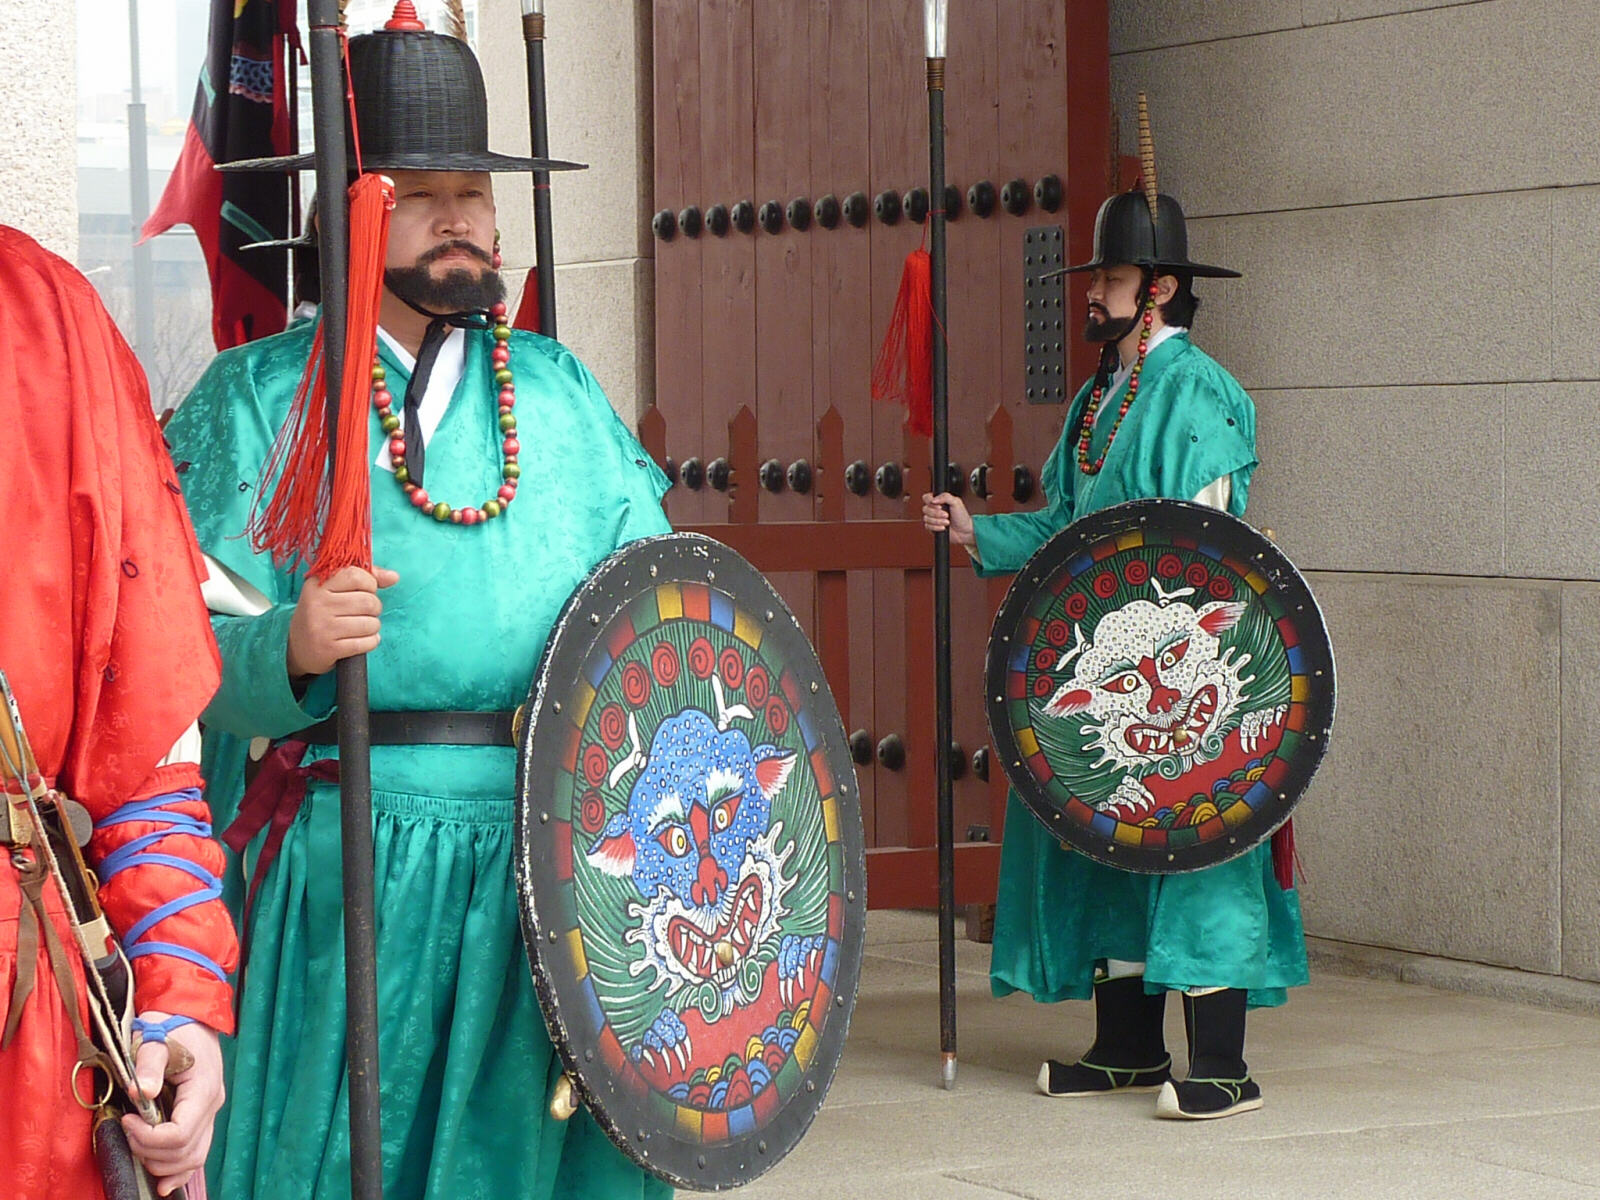 The guards at Gyeongbok Palace, Seoul, South Korea